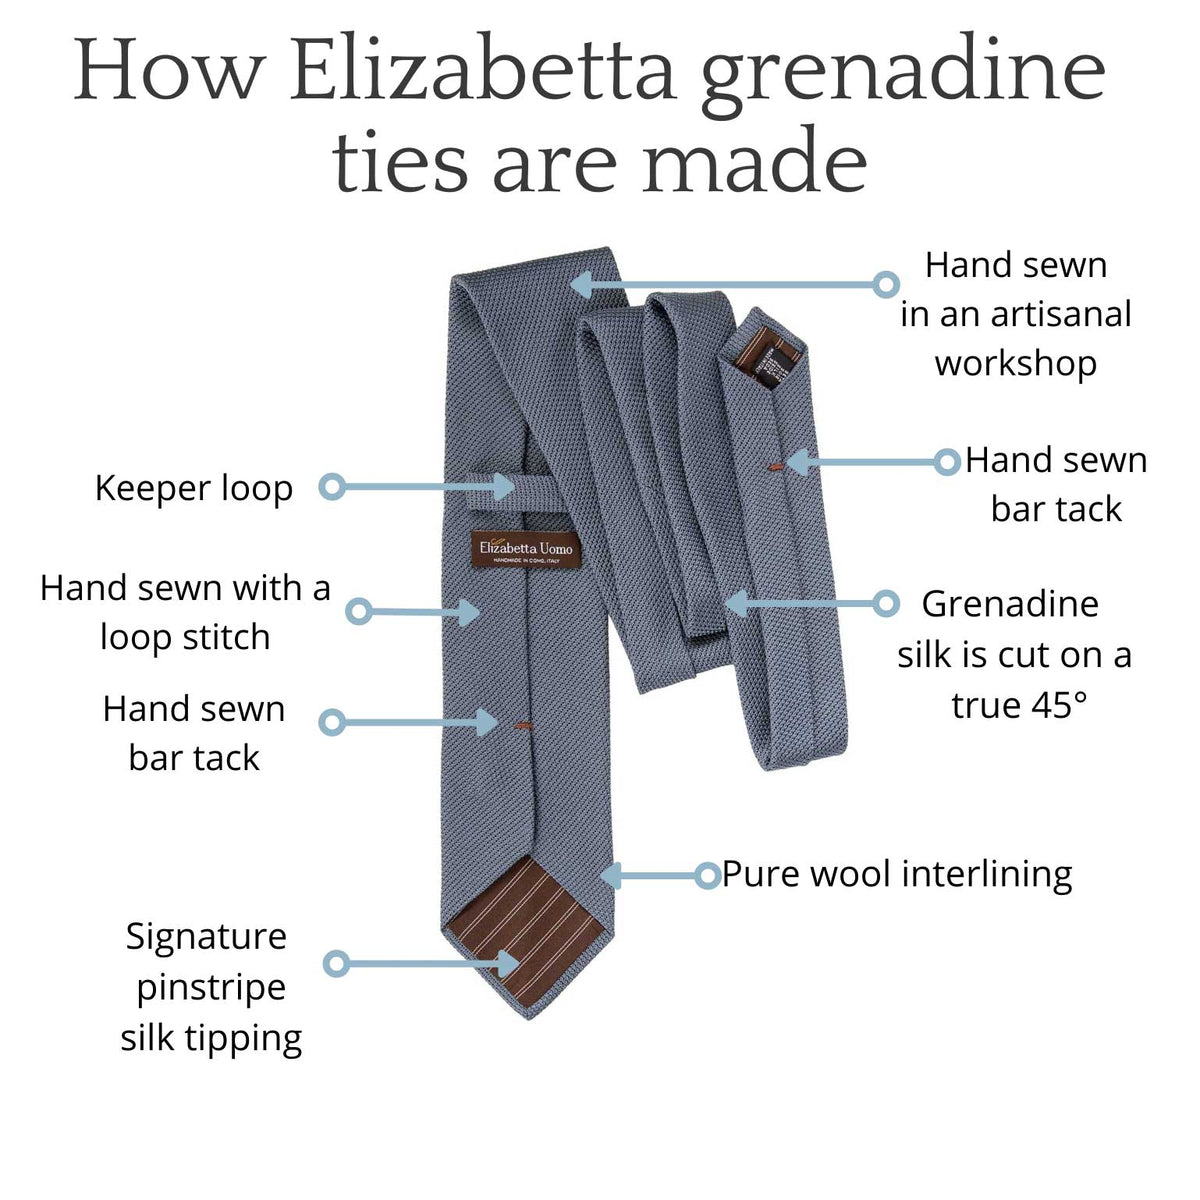 Elizabetta handmade grenadine ties